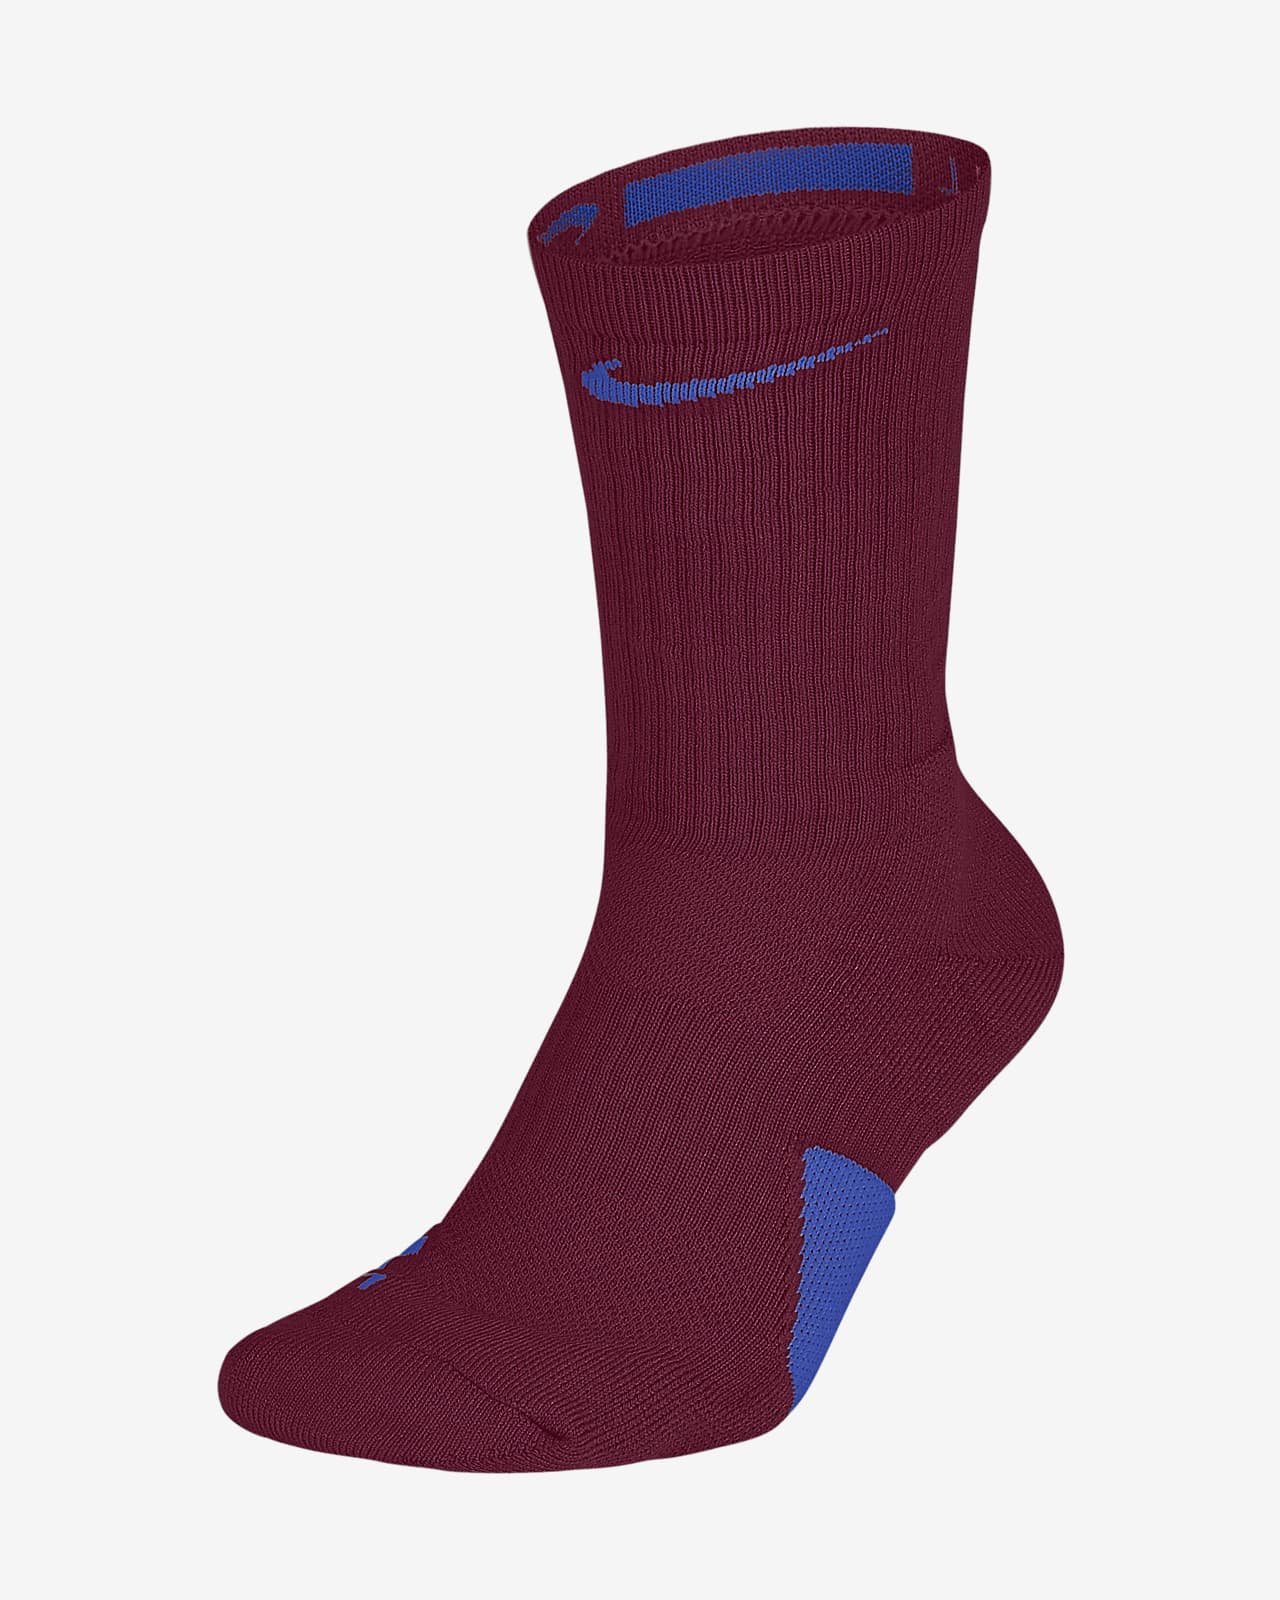 nike elite socks 1.0